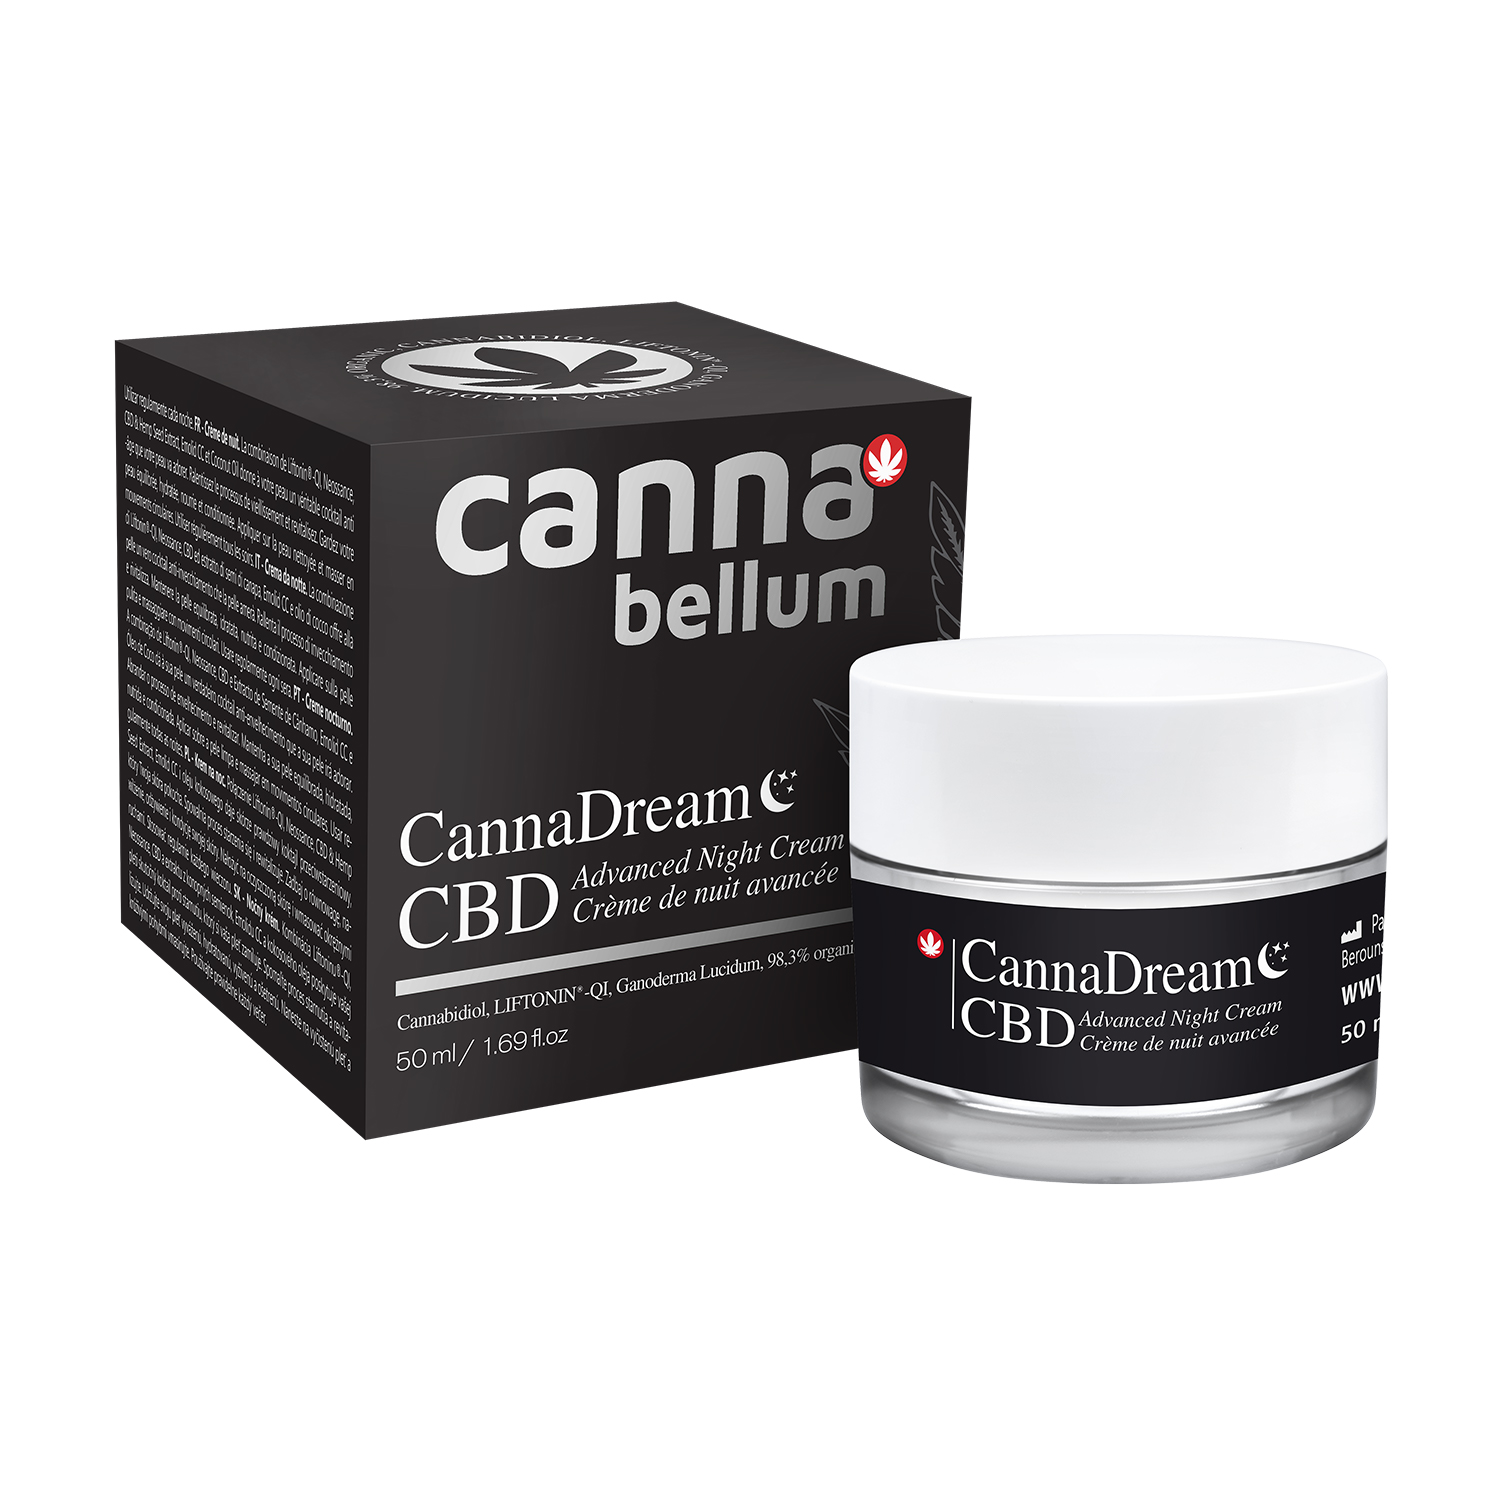 Cannabellum CannaDream advanced night cream50ml P1222 komplet WEB 50